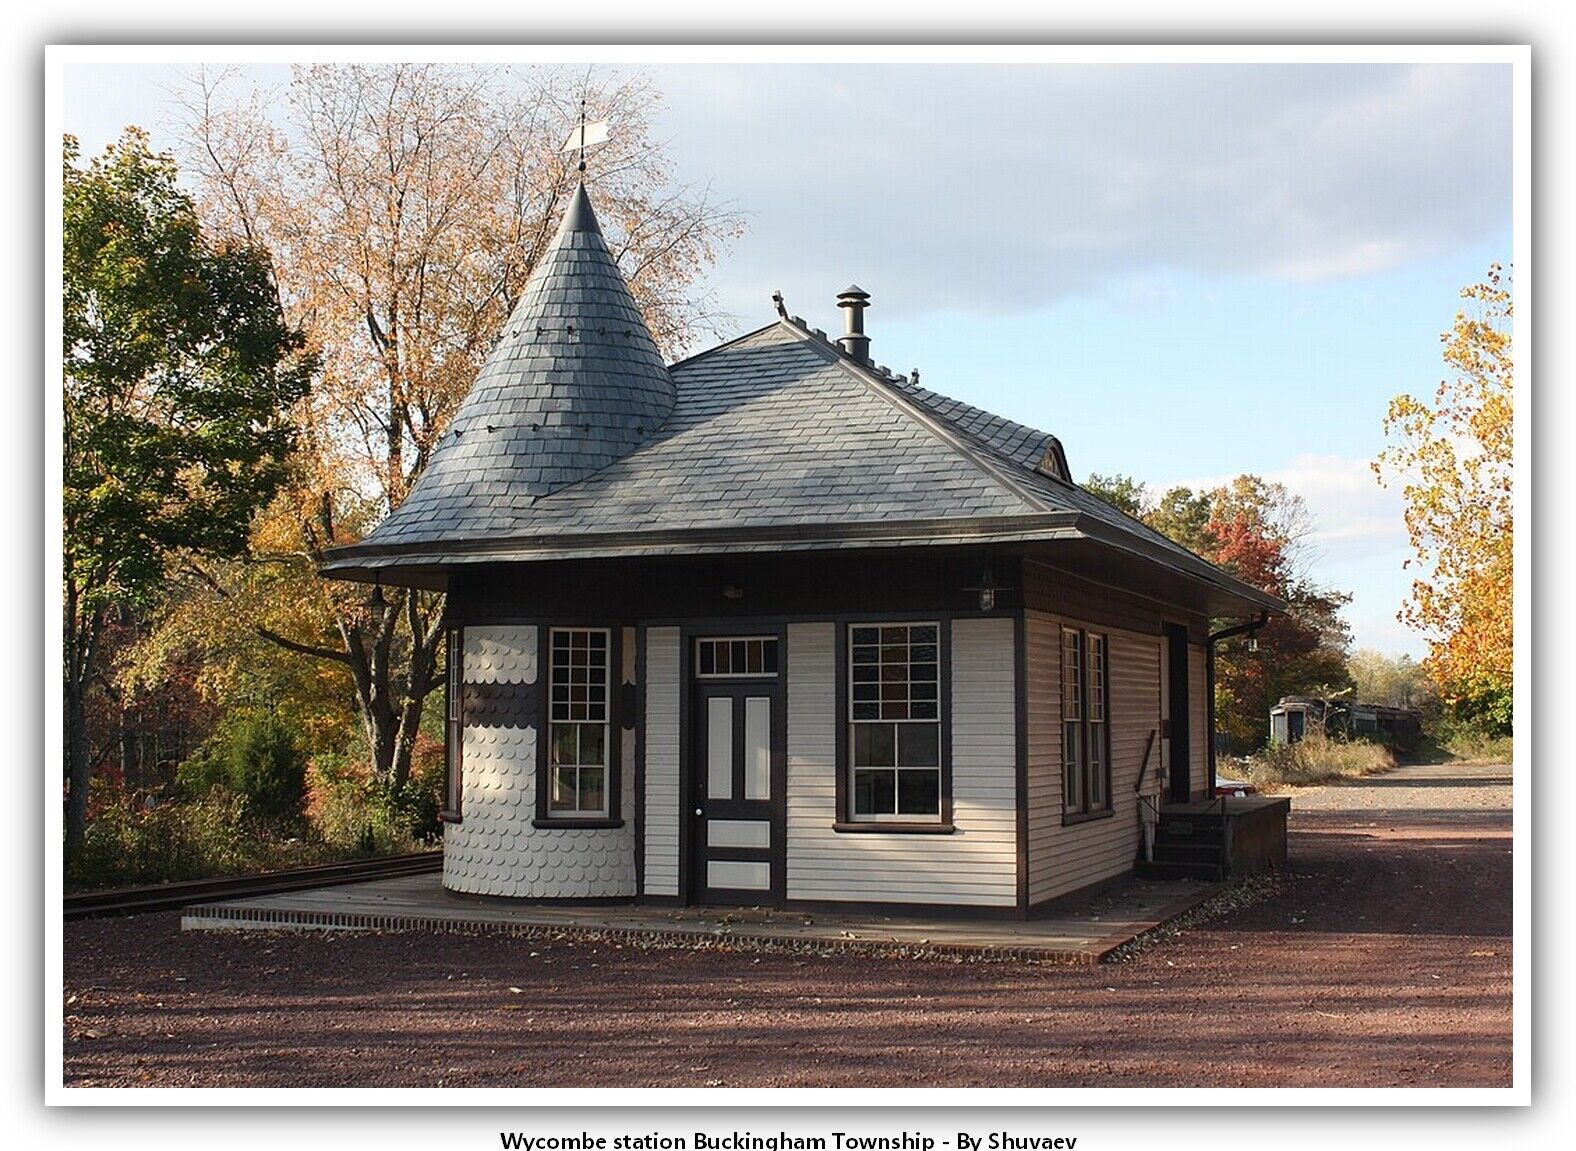 Wycombe station Buckingham Township Railway Postcard